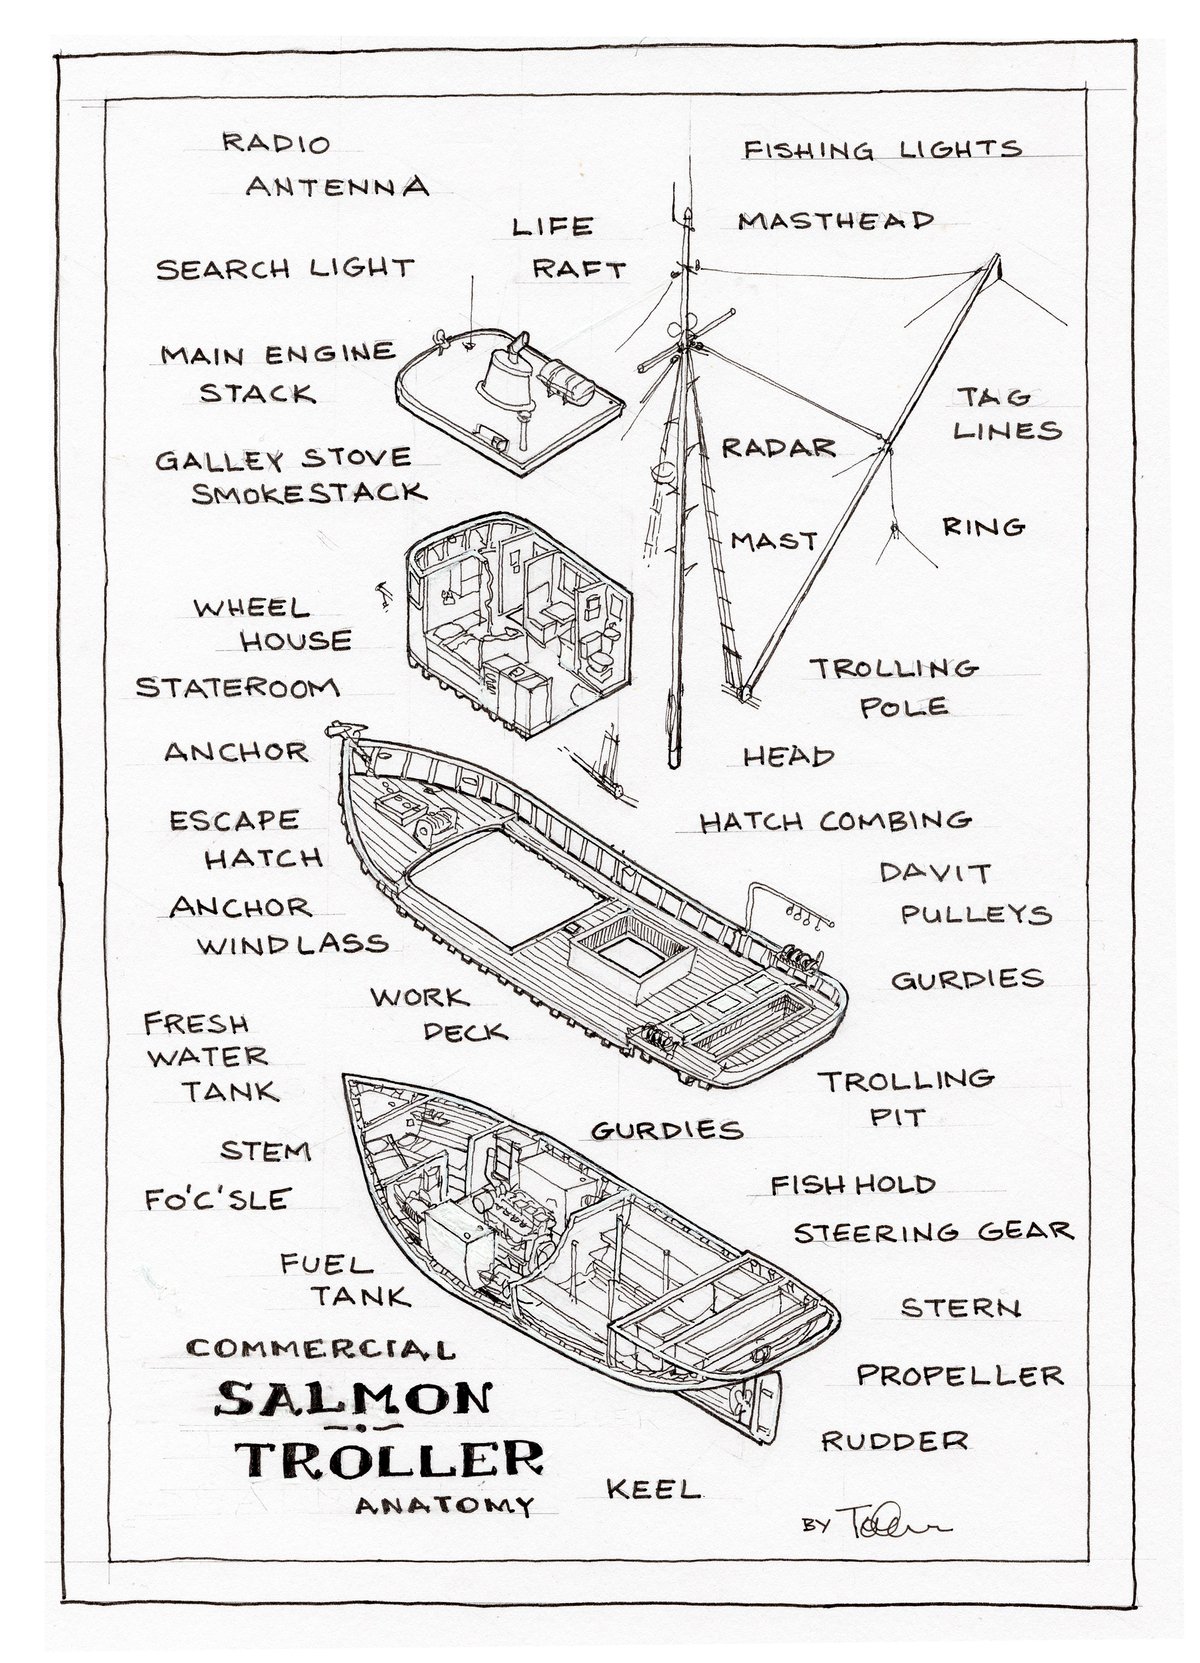 Anatomy of a Salmon Troller